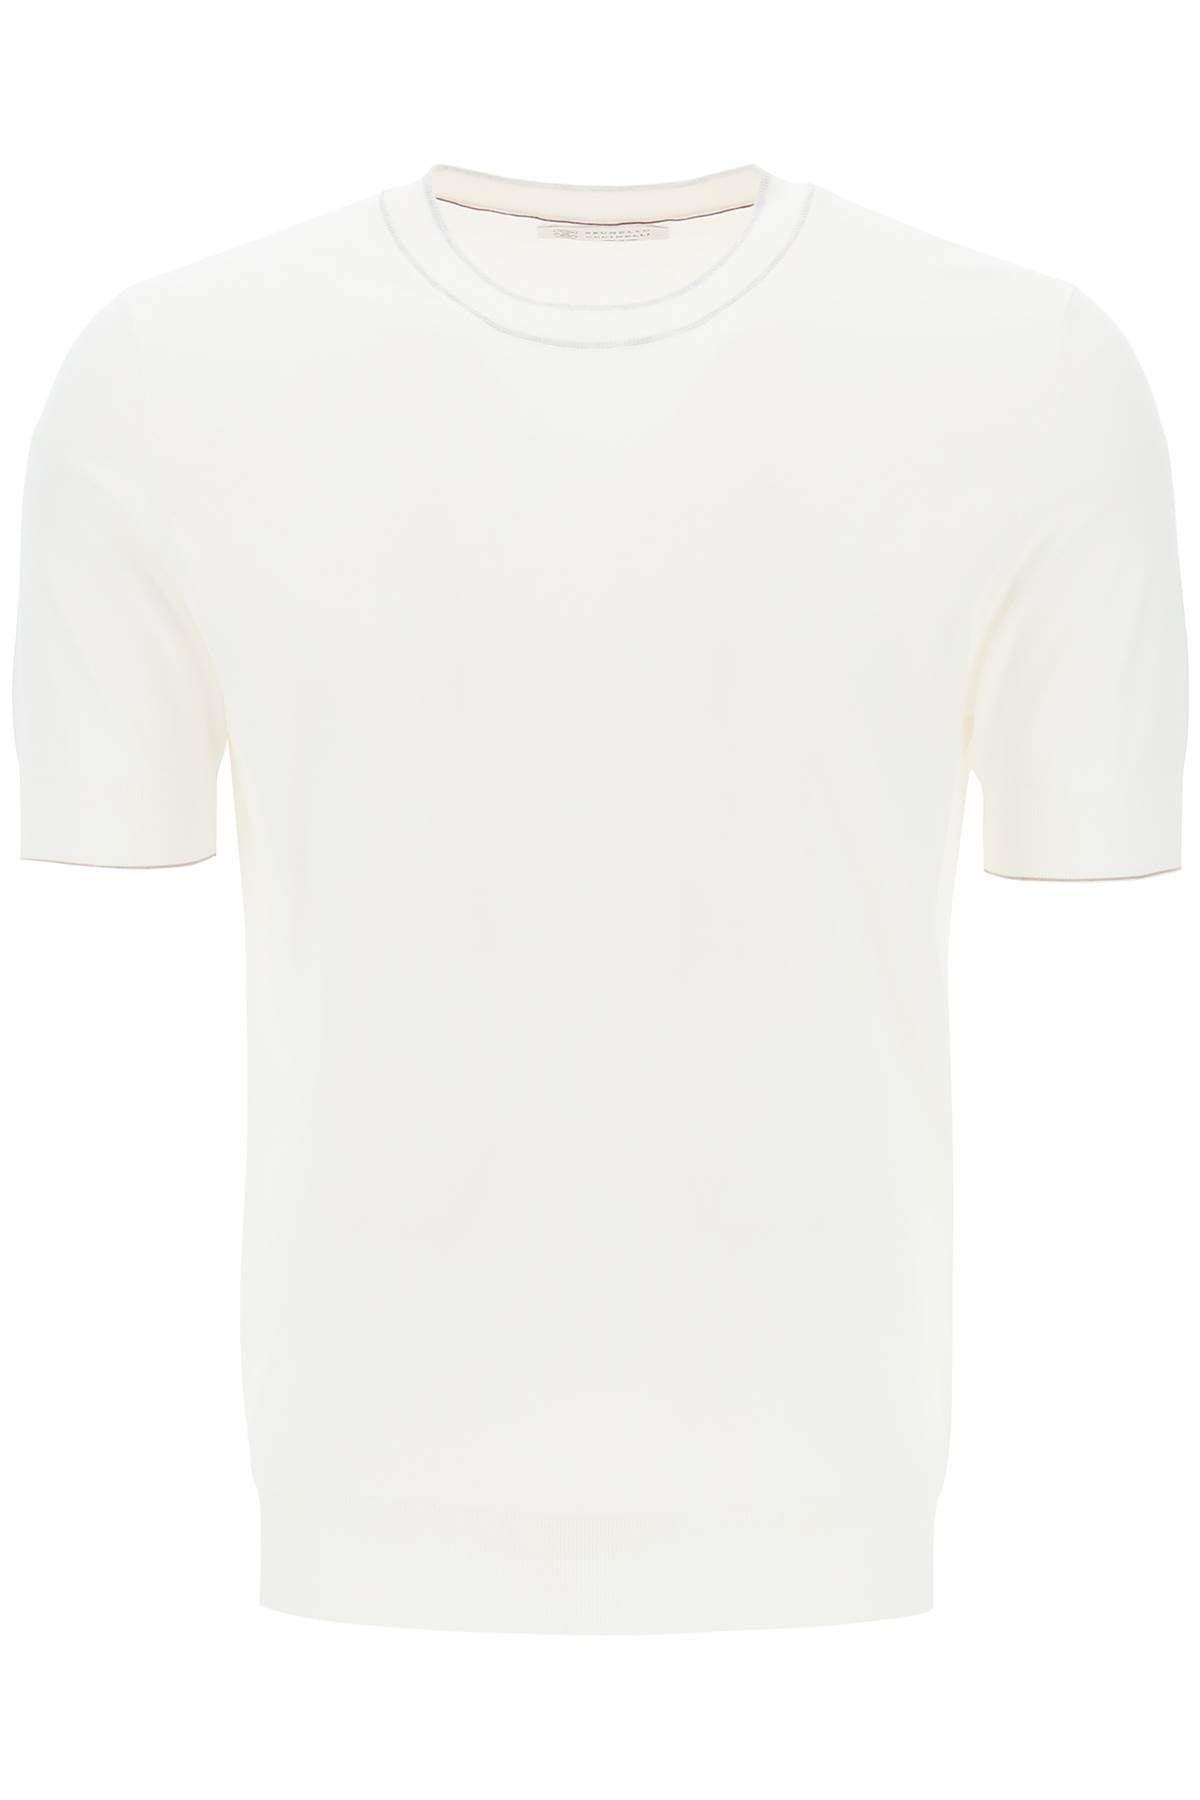 Brunello cucinelli cotton yarn t-shirt for men-men > clothing > t-shirts and sweatshirts > t-shirts-Brunello Cucinelli-Urbanheer